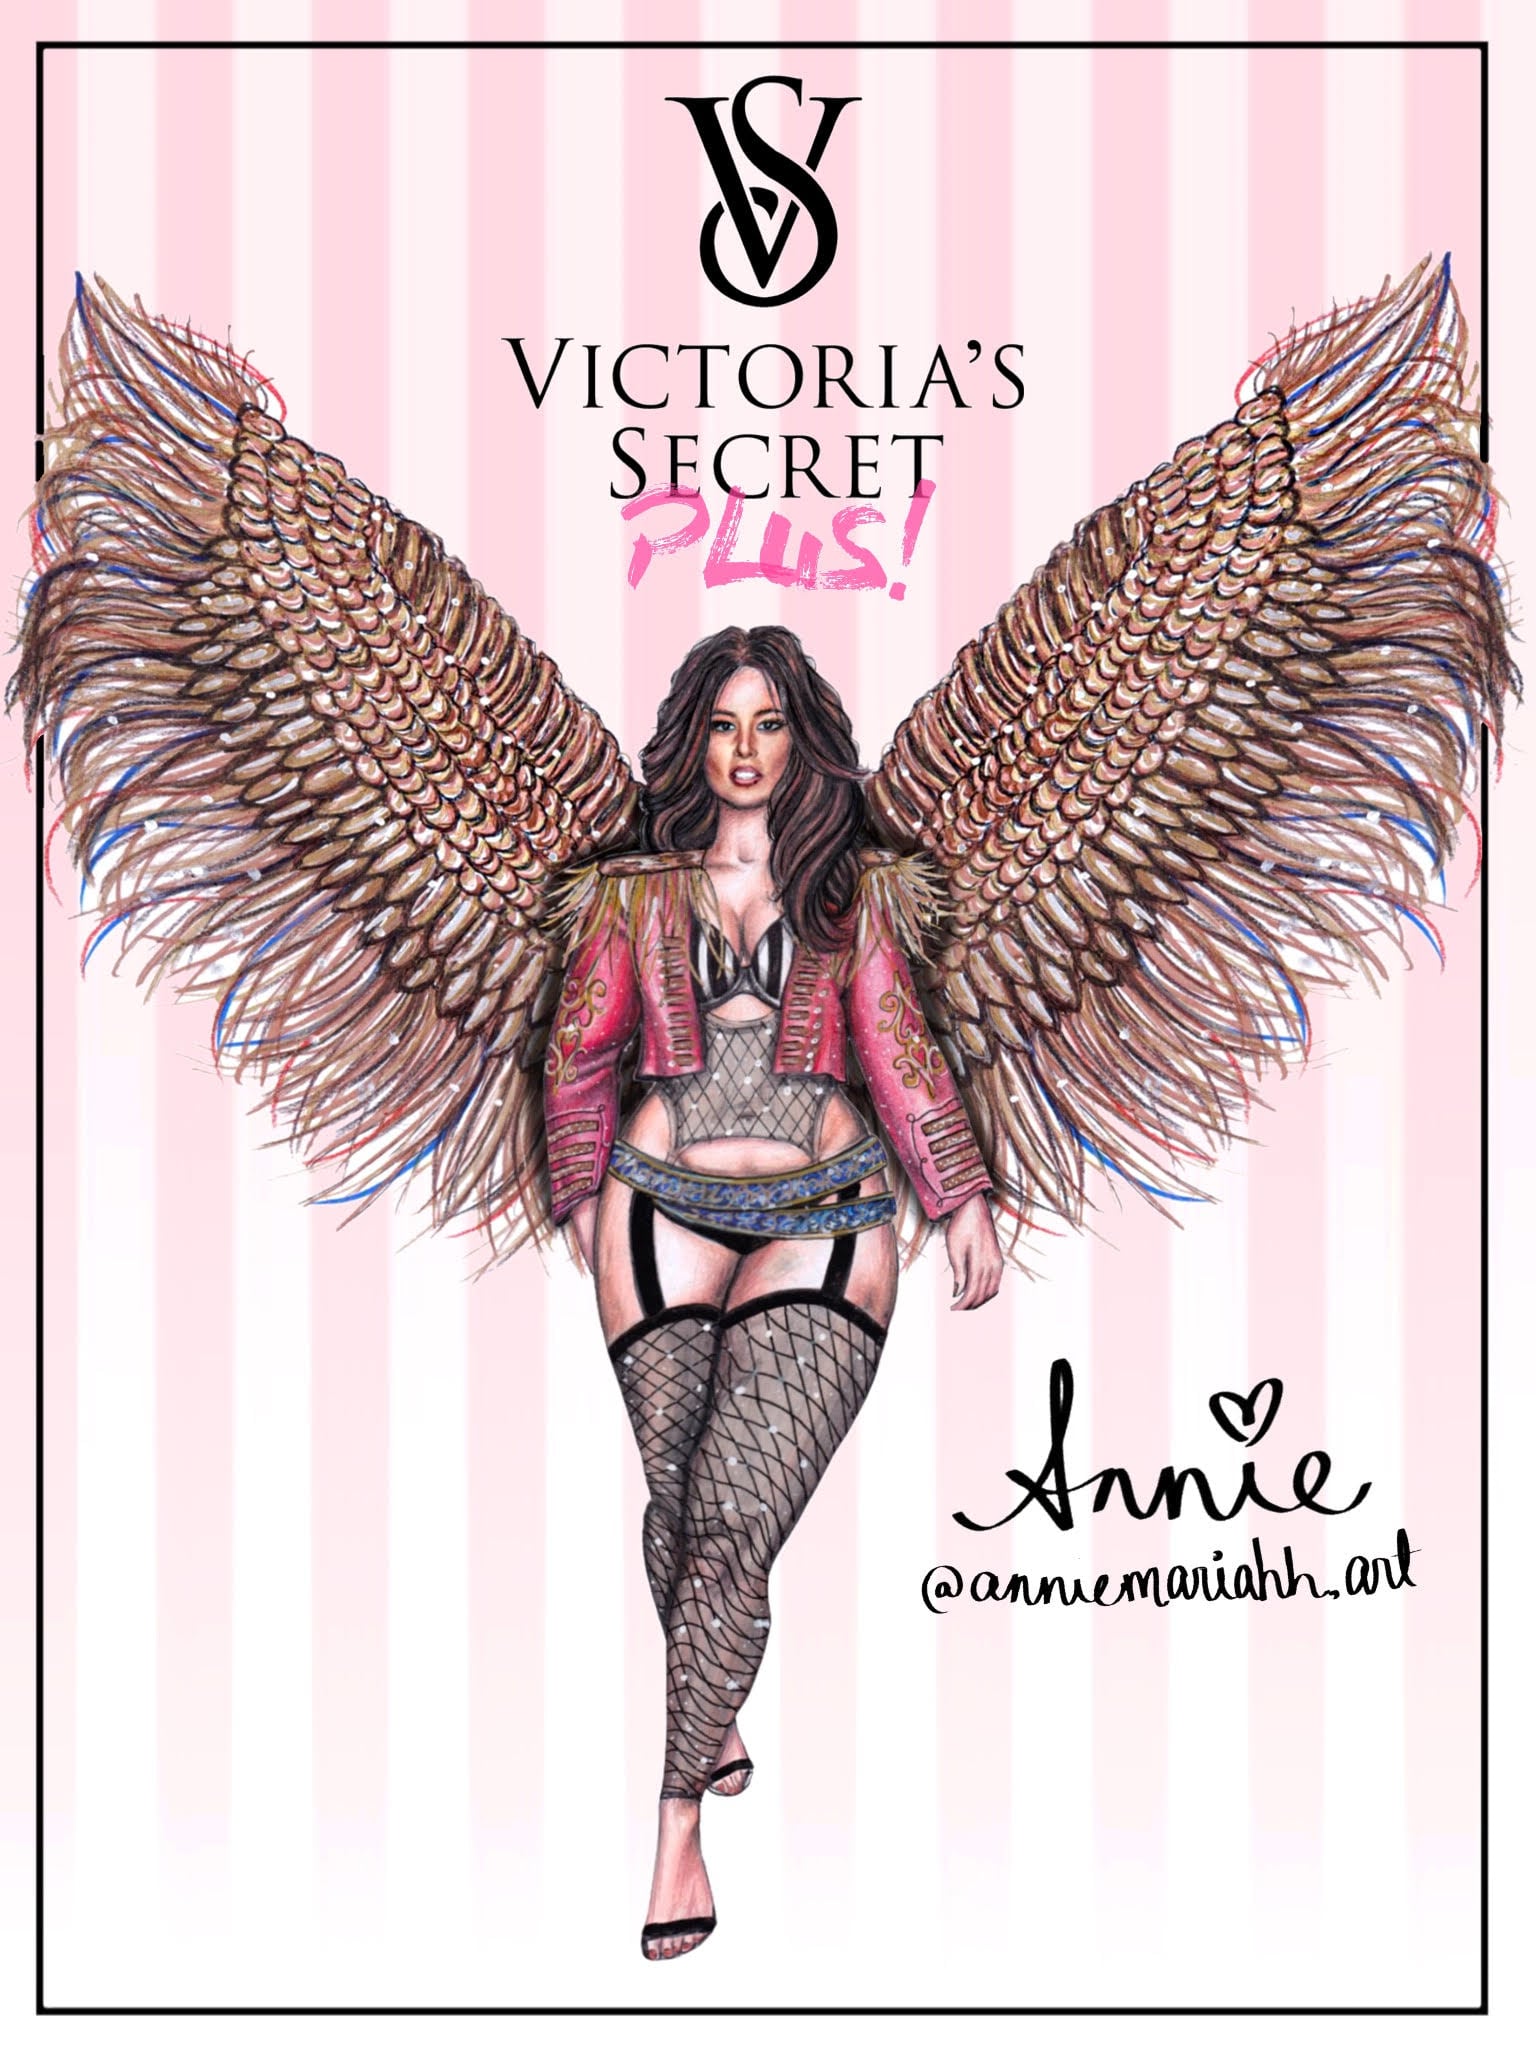 Victoria's Secret Patterns, Vol. 1 The Icon by itsfarahbakhsh on DeviantArt